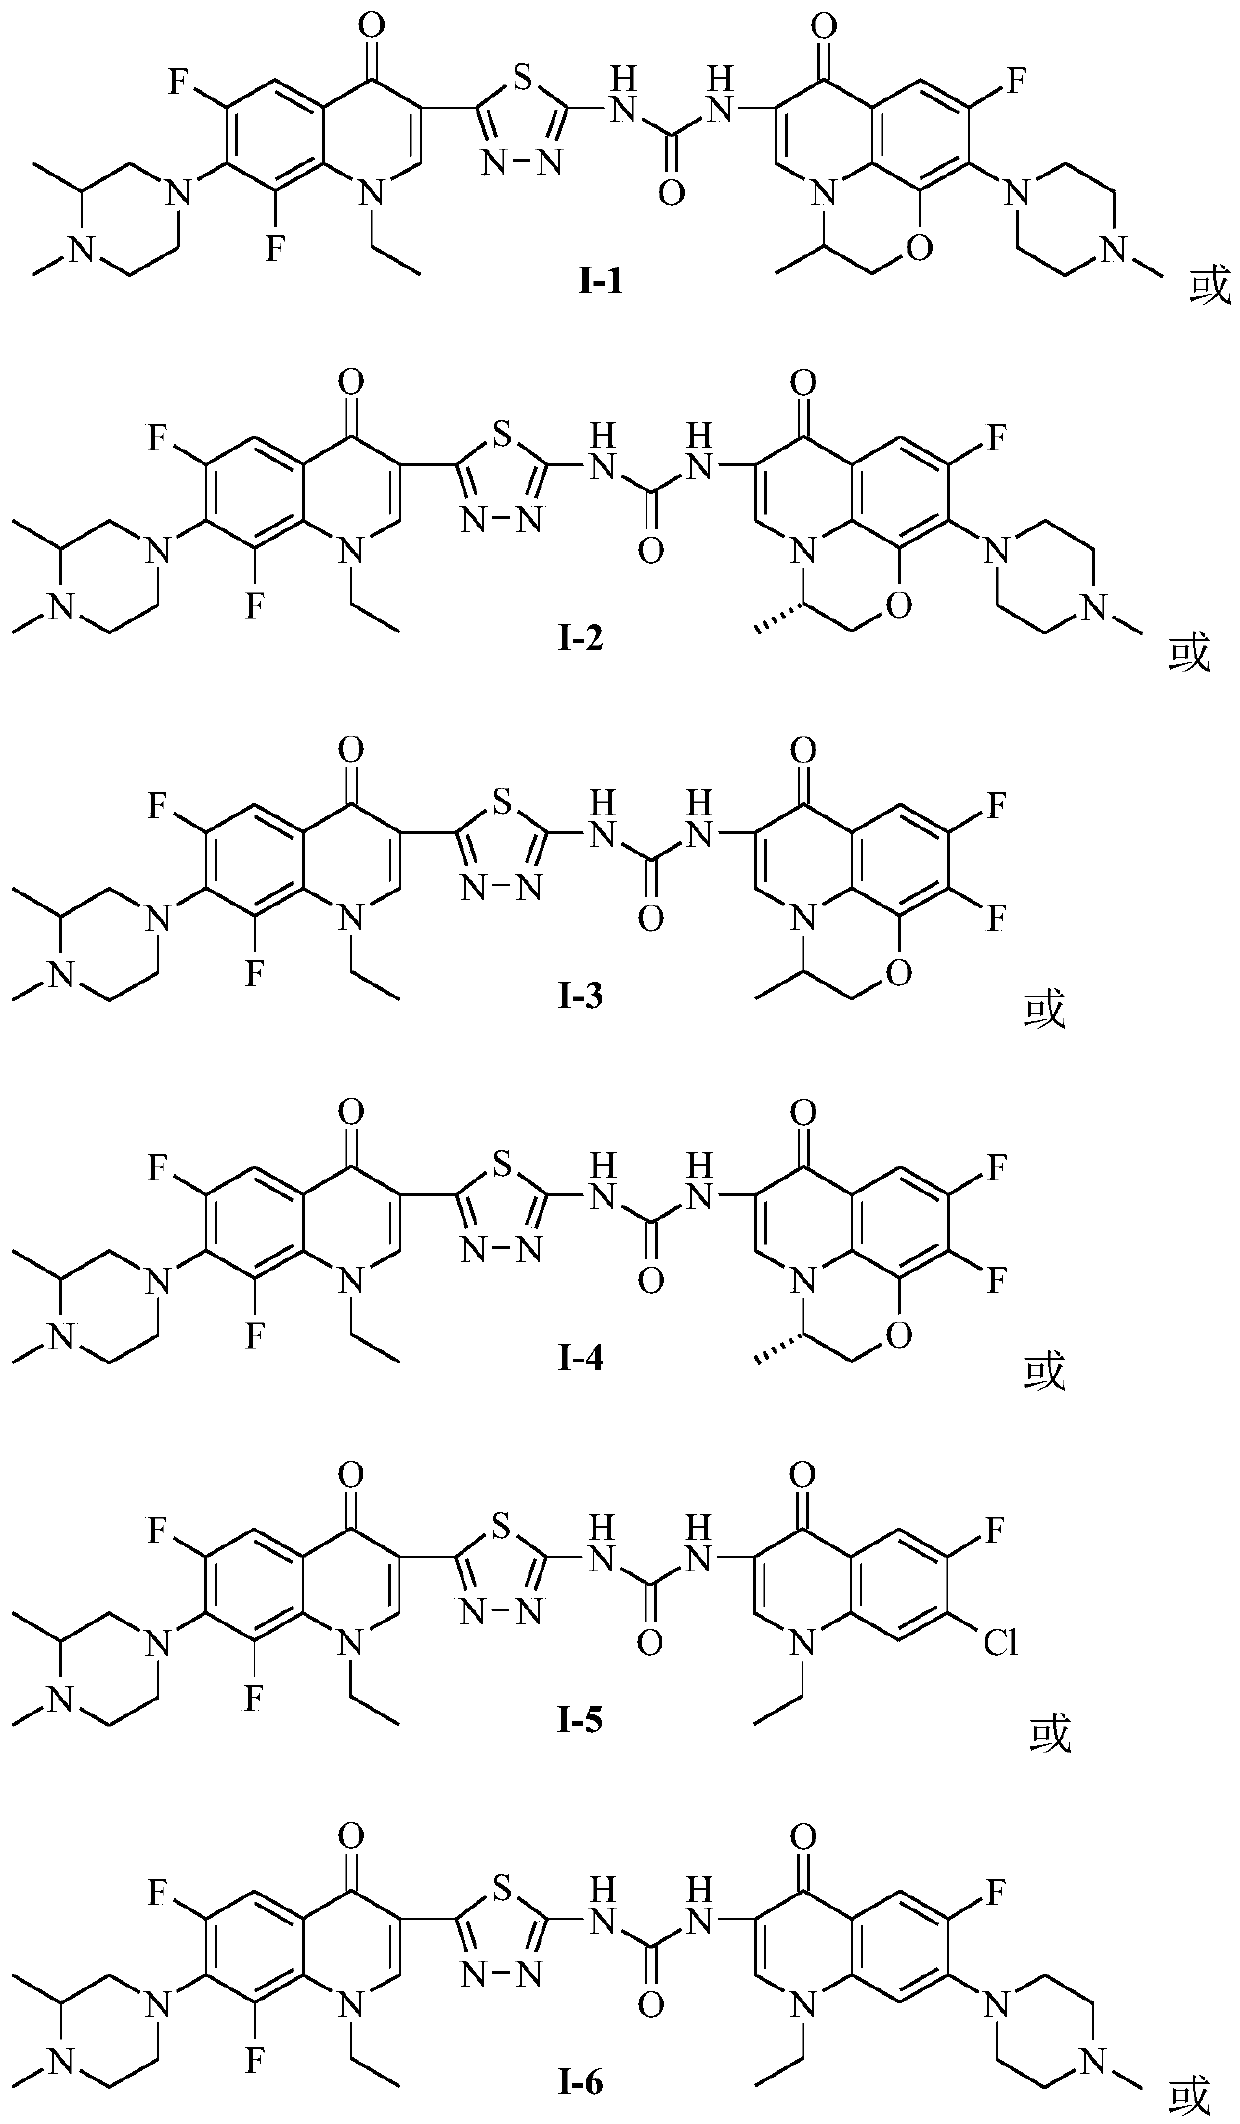 Preparation and application of bis-fluoroquinolone thiadiazole urea N-methyl lomefloxacin derivatives